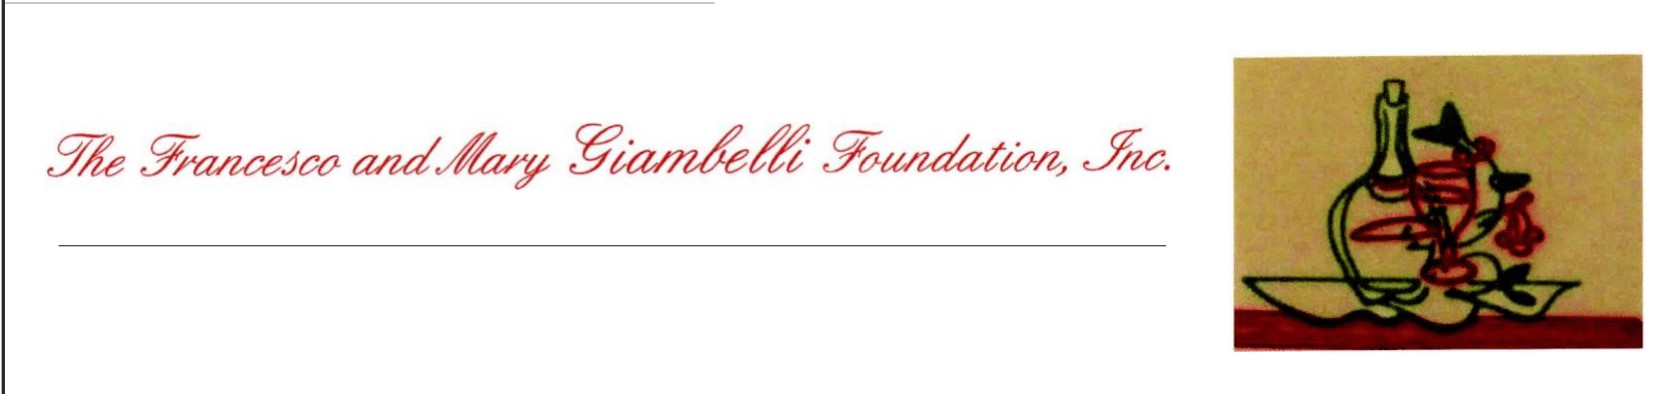 The Francesco and Mary Giambelli Foundation